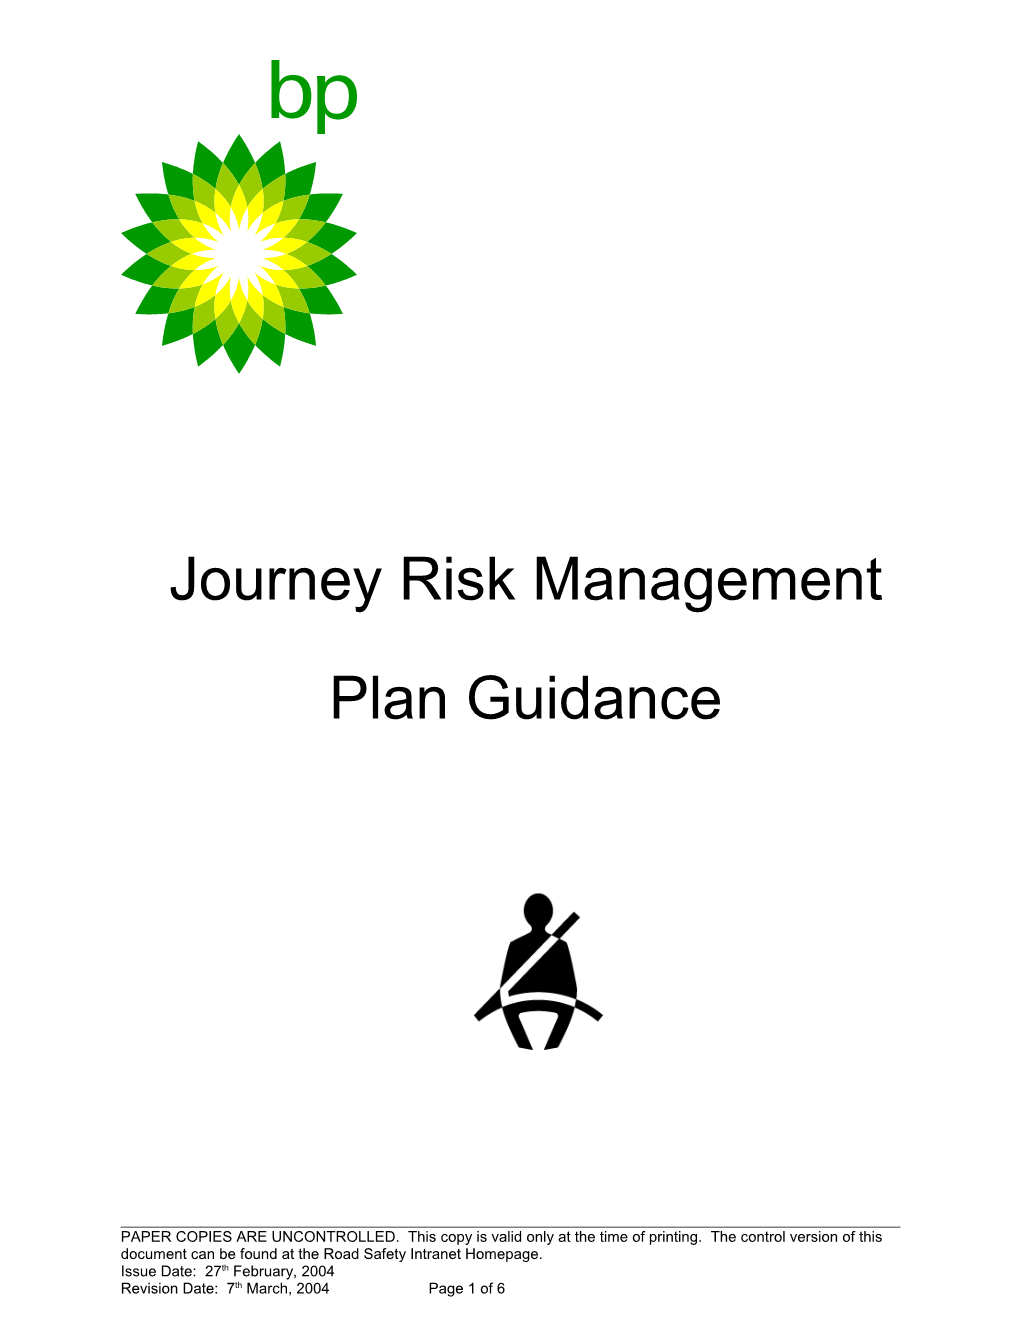 Journey Risk Management Plans